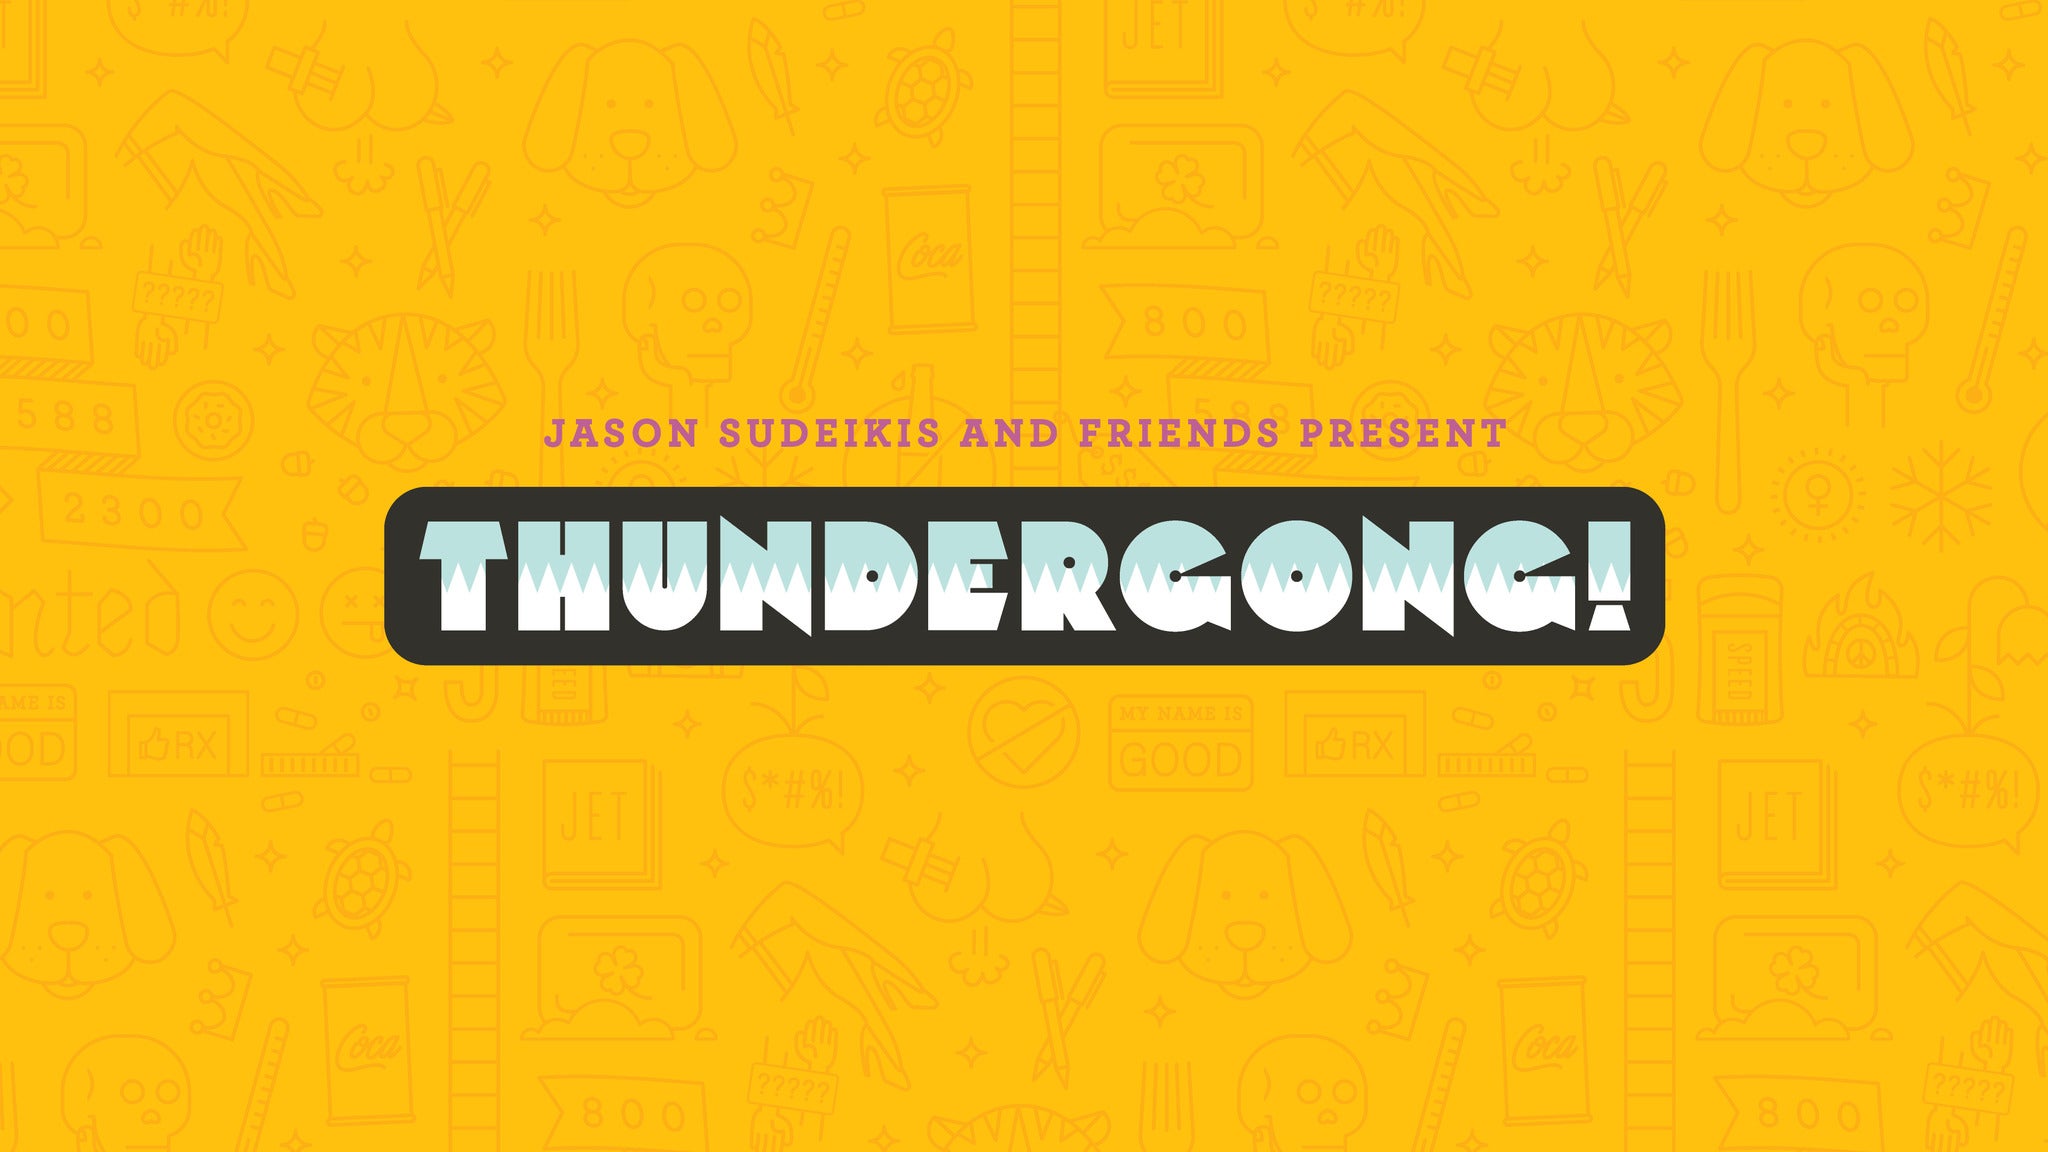 Thundergong! Tickets Event Dates & Schedule